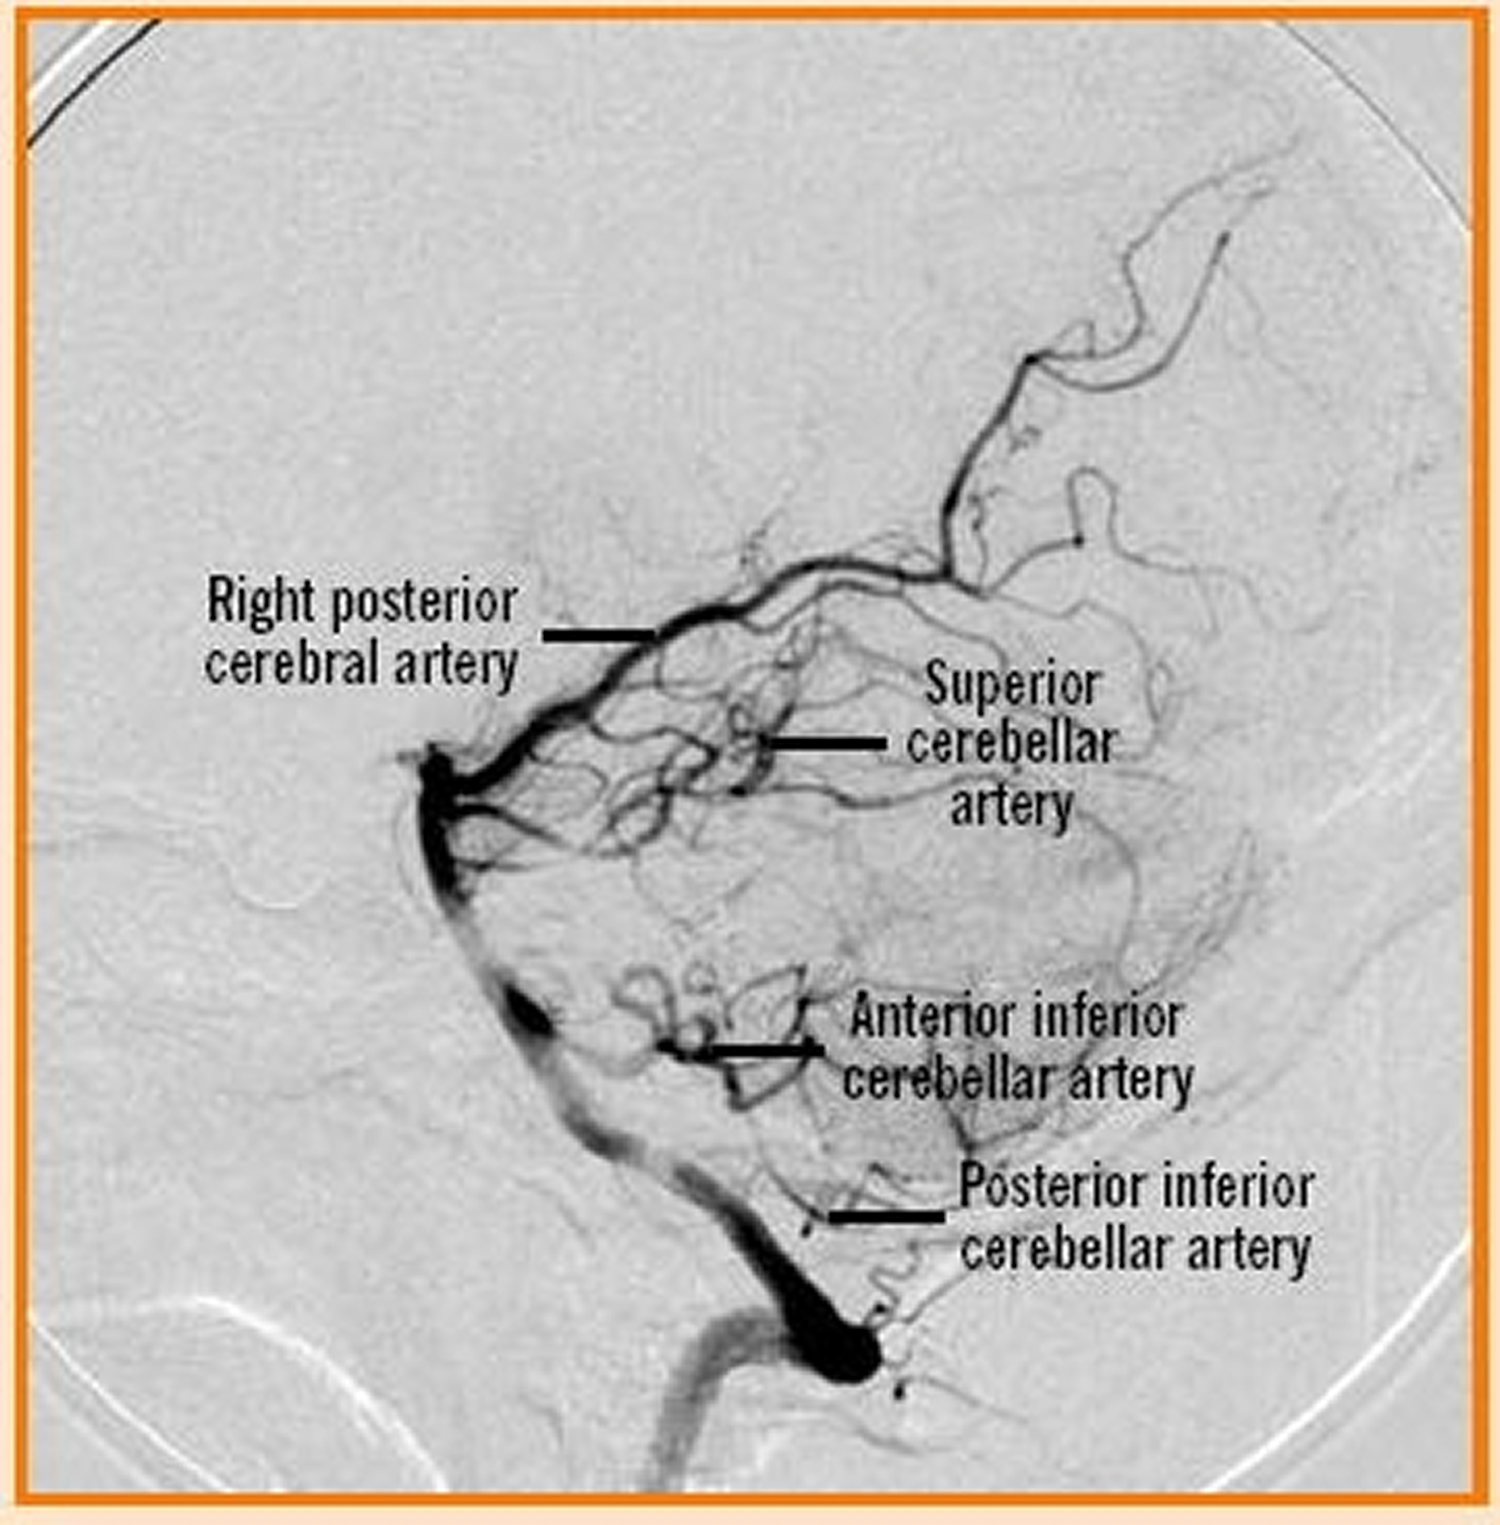 Vertebral artery segments - intracranial